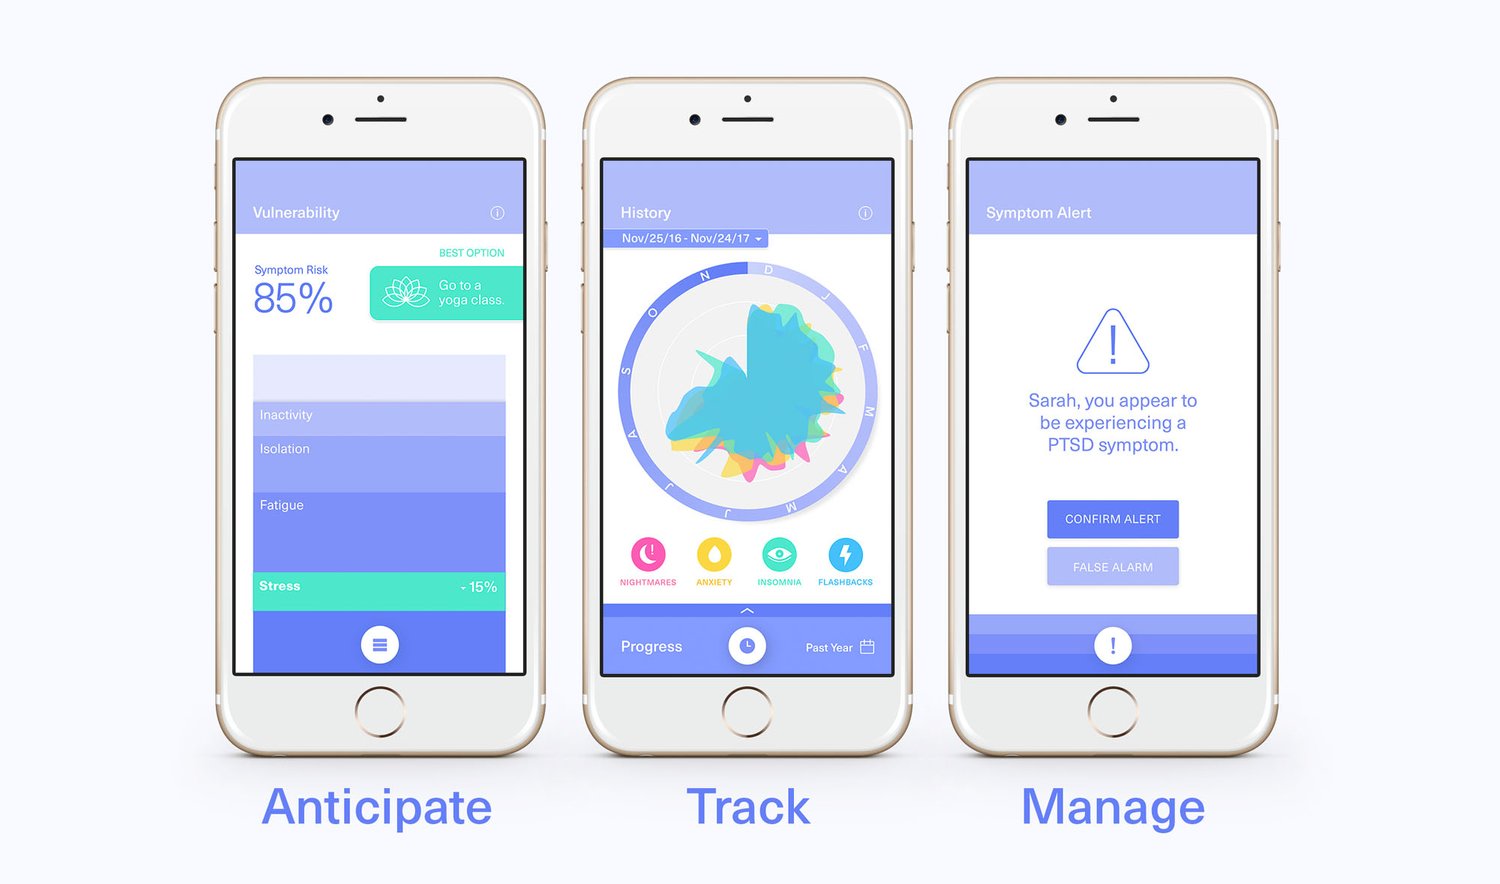 Anticipate, track, and manage symptoms app screens